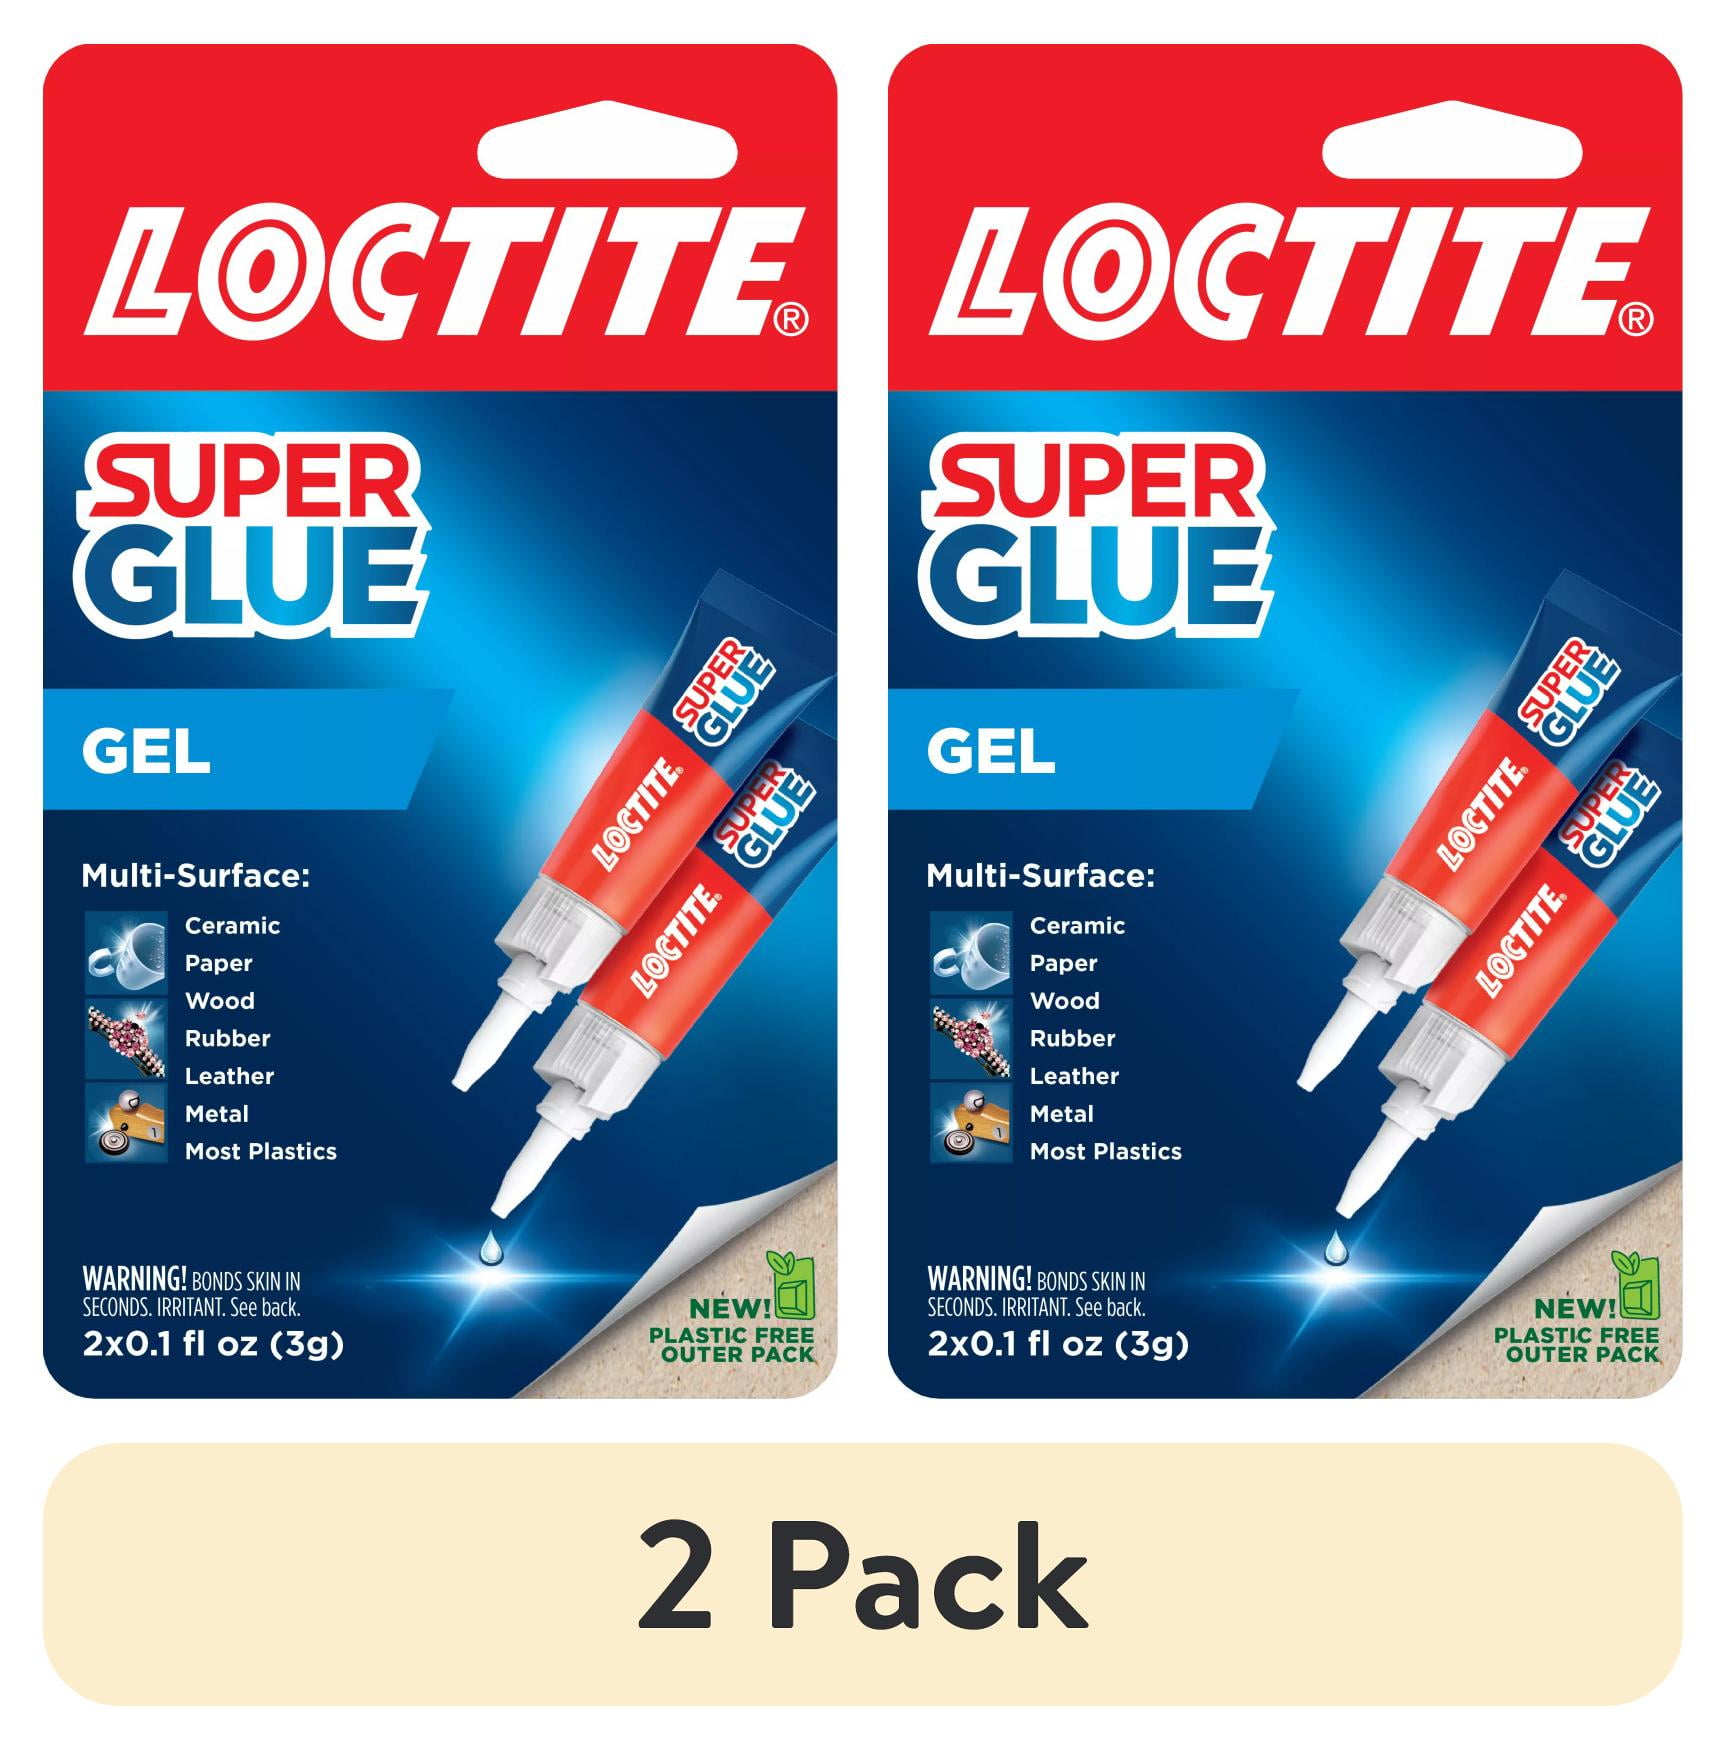 2 pack) Loctite Super Glue Gel Tube, 1 Pack of 2 Tubes, Clear 3 g Tubes 